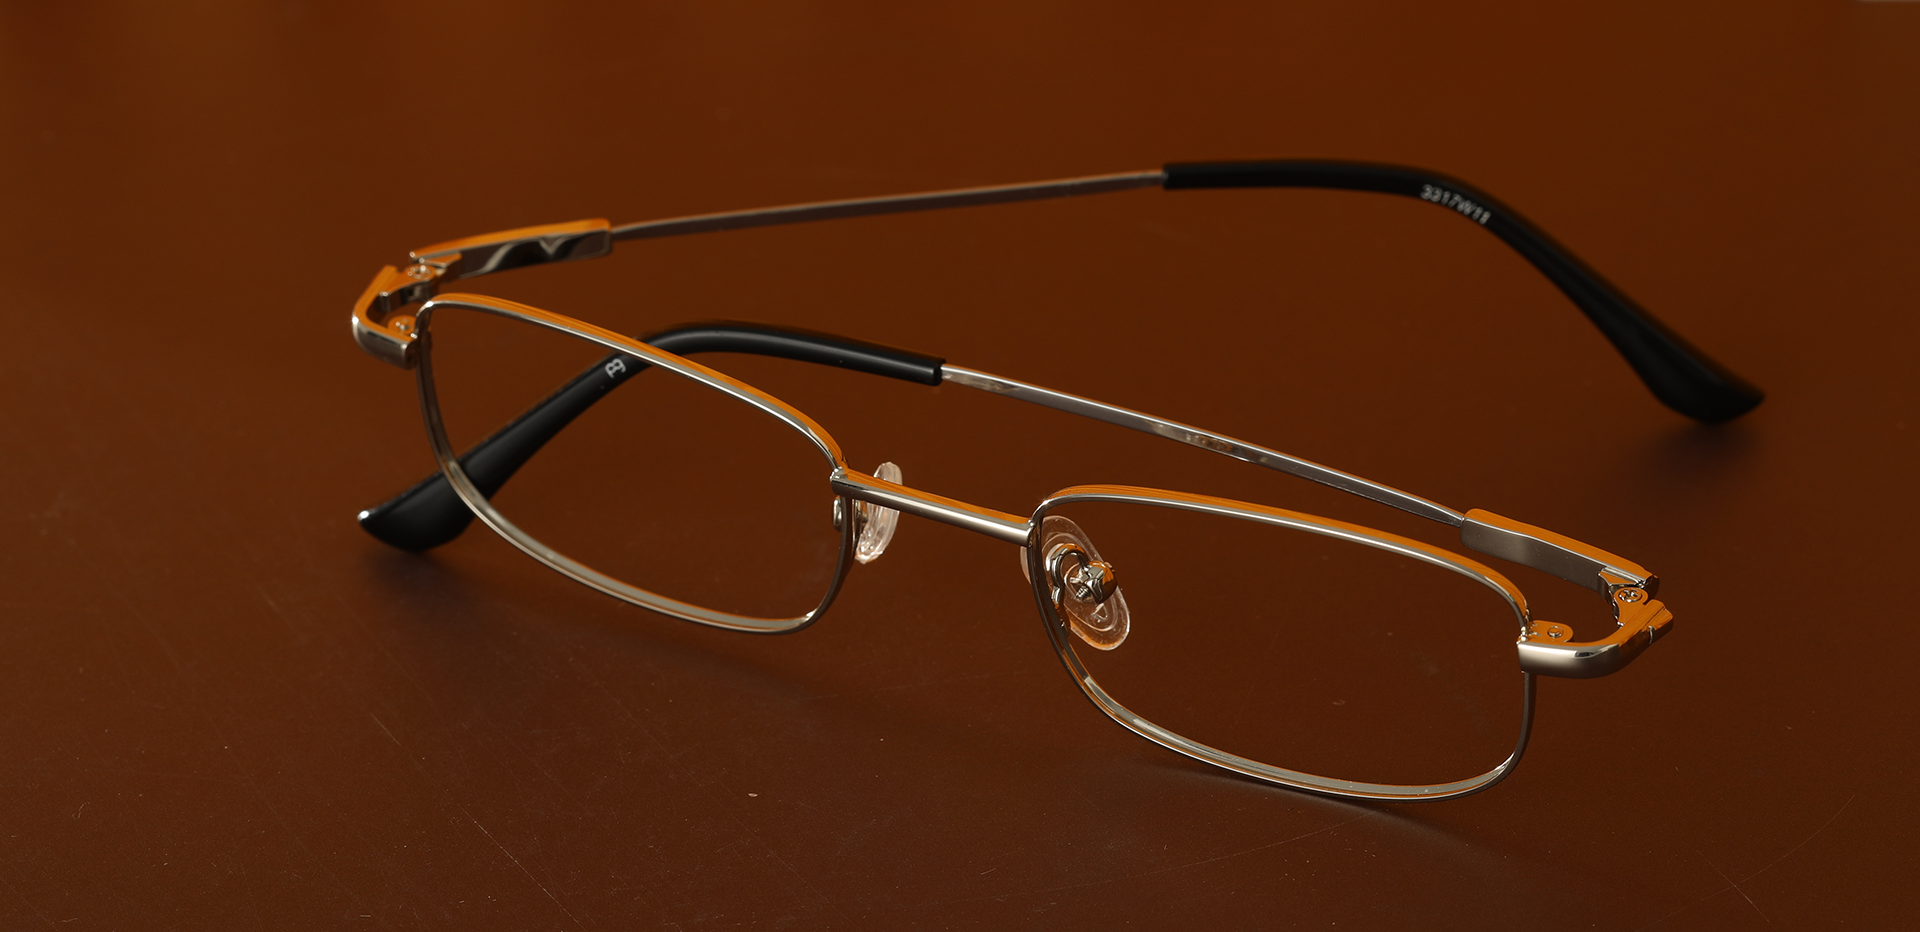 Verden Rectangle Single Vision Glasses - Silver